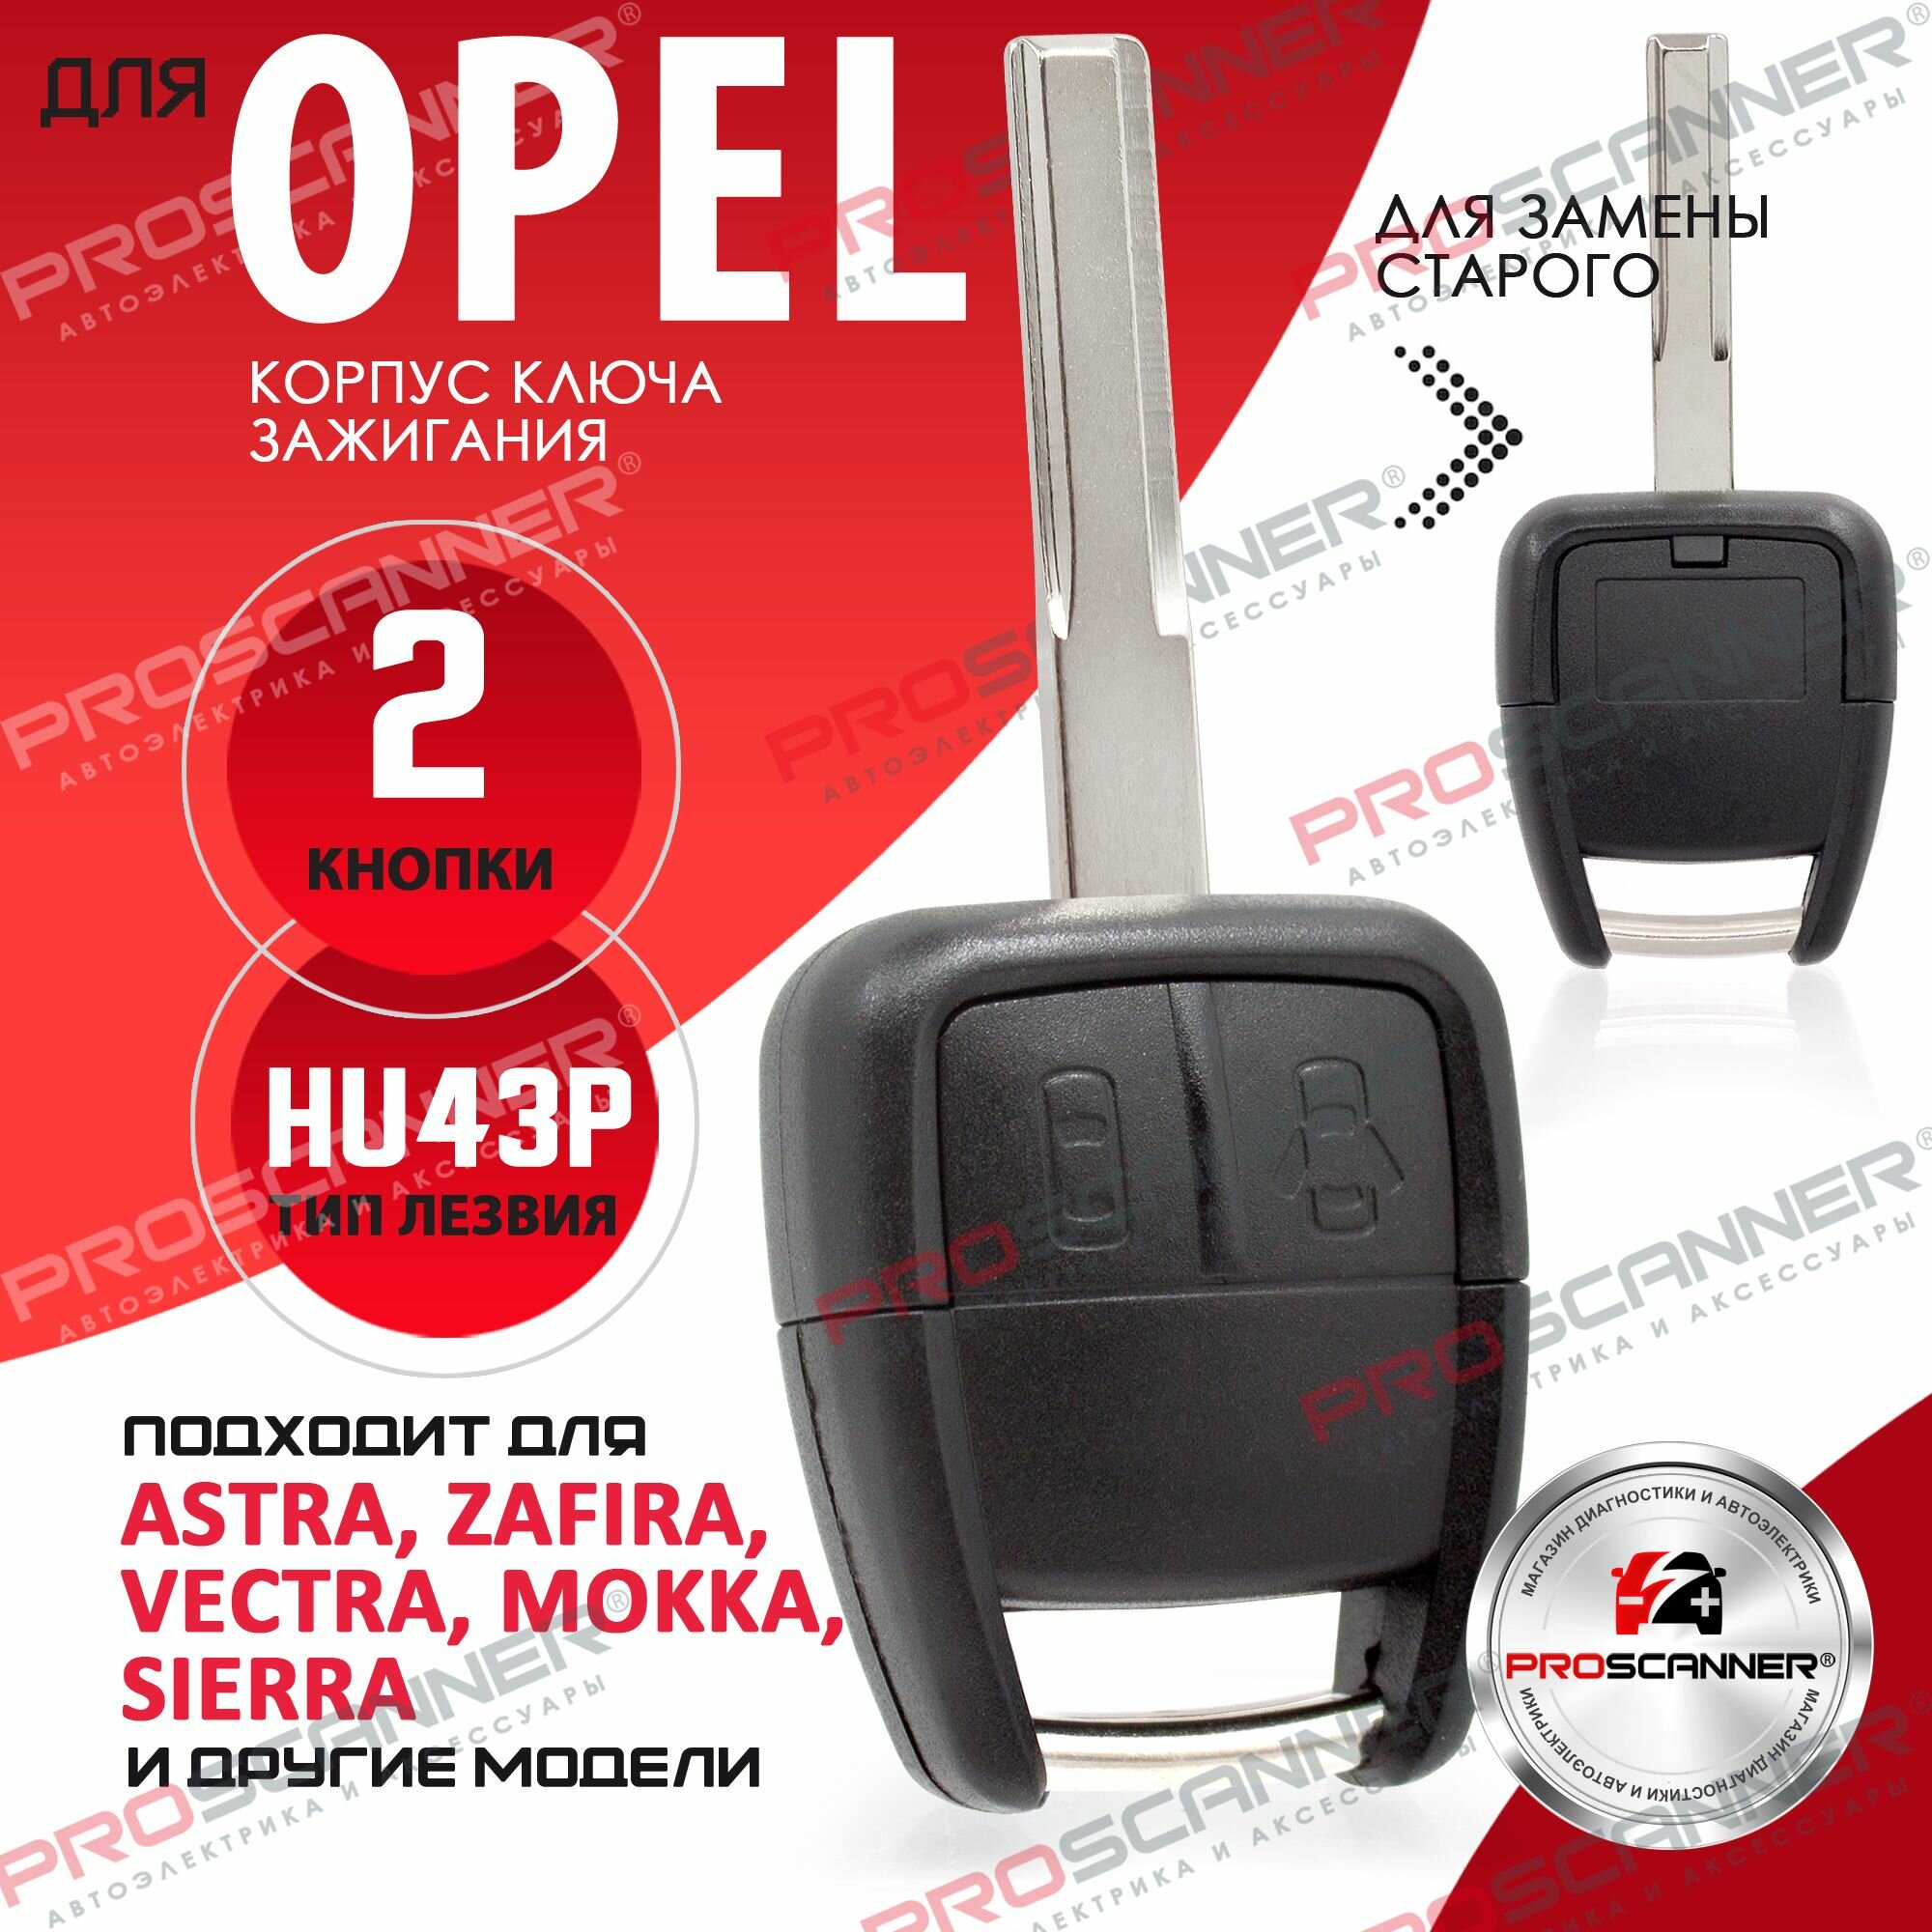 Корпус ключа зажигания для Opel Astra Zafira Omega Vectra Frontera - 1 штука (2х кнопочный ключ лезвие HU43P)